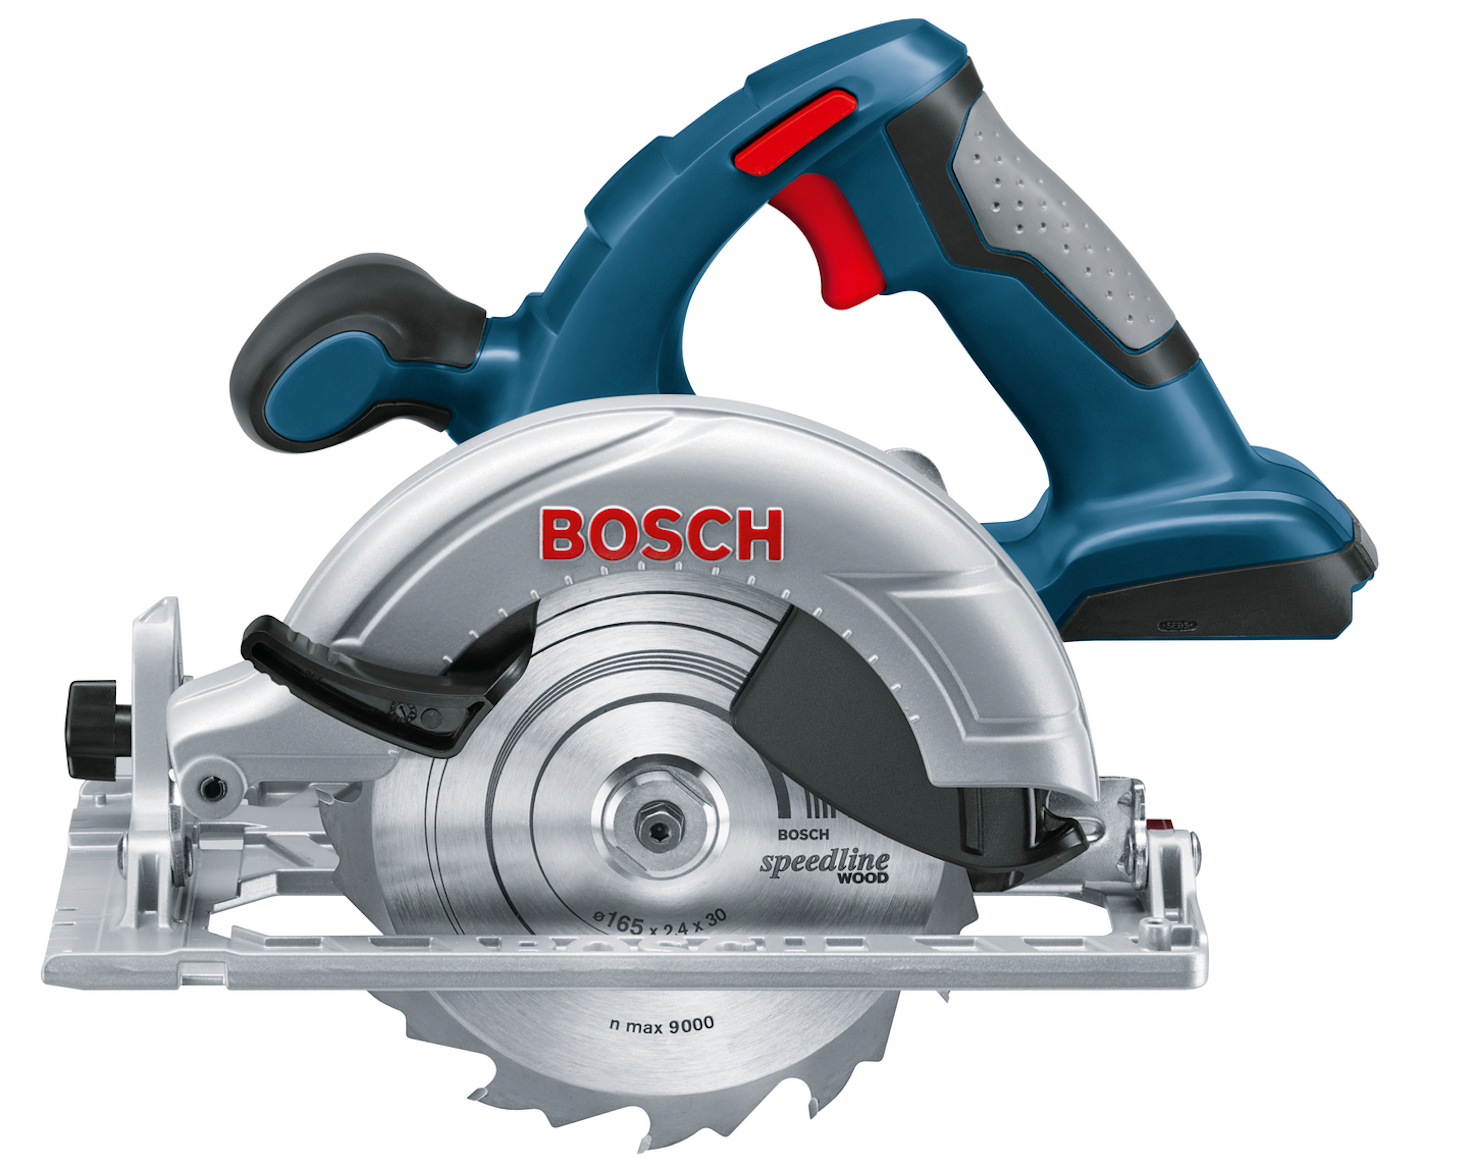 Bosch GKS 18 V-li. Аккумуляторная дисковая пила бош. Аккумуляторная циркулярная пила Bosch. Аккумуляторная циркулярная дисковая ПИЛАBOSCH GKS 18v-li ø165mm.